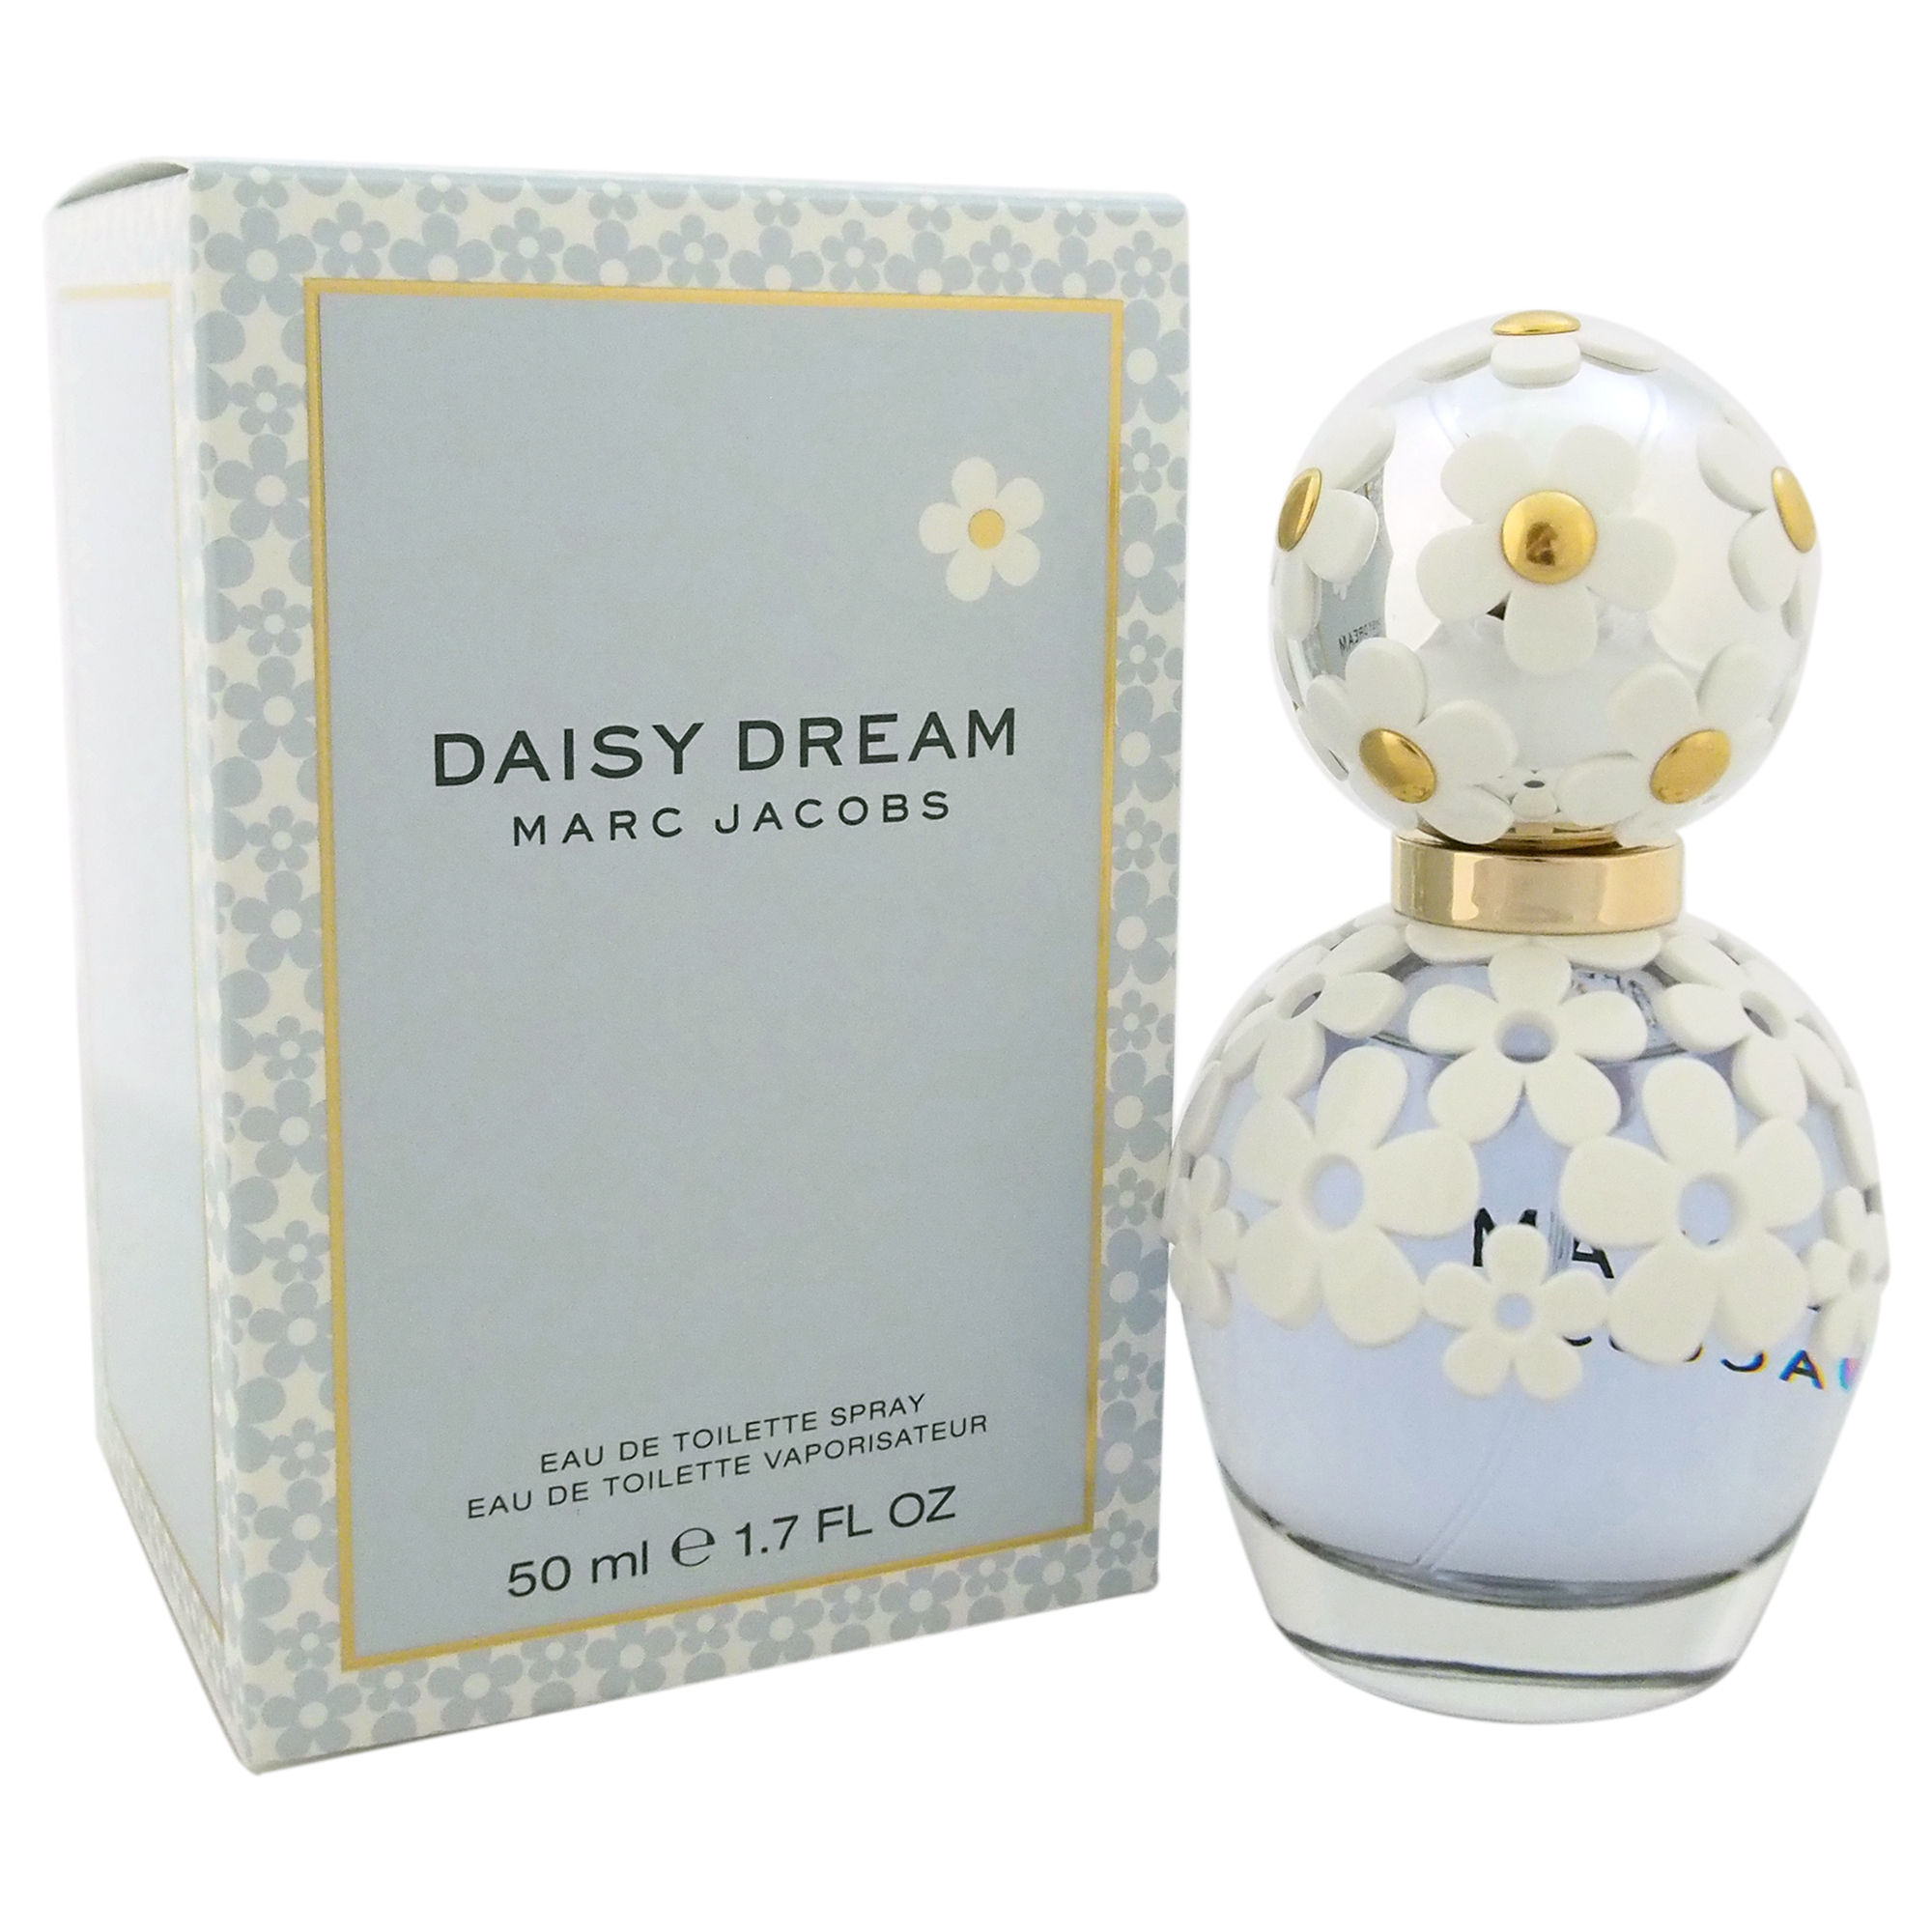 Daisy Dream by Marc Jacobs for Women - 1.7 oz EDT Spray